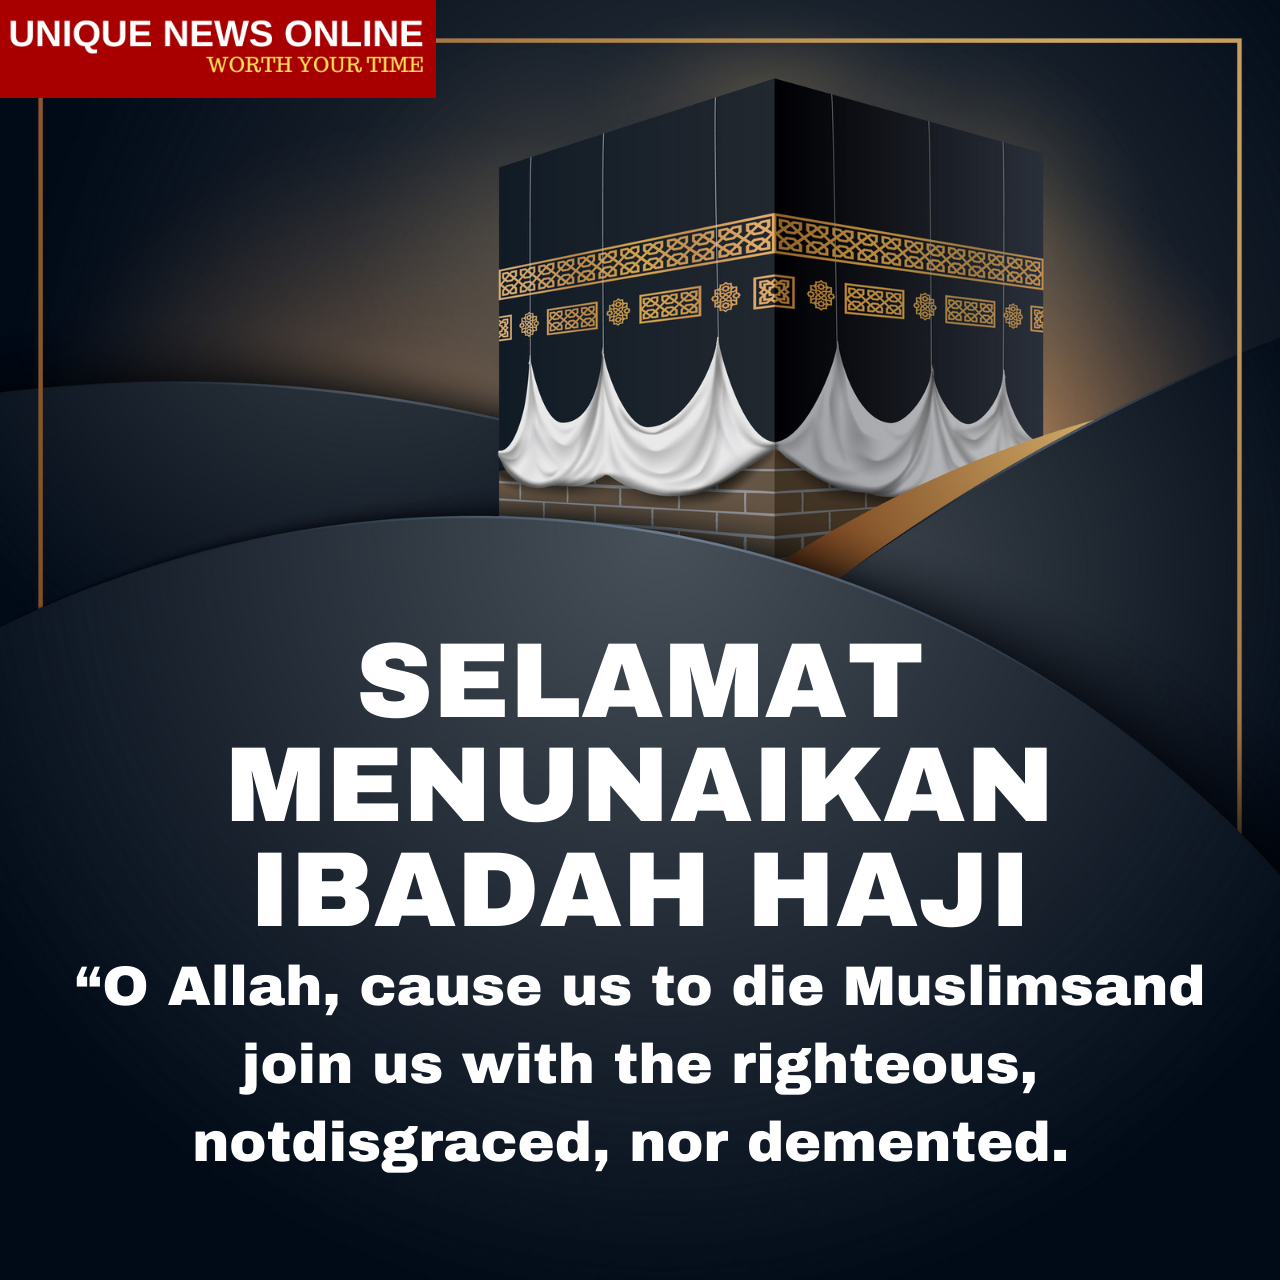 Selamat Menunaikan Ibadah Haji 2021 Malay Wishes, Images, Status, Quotes, Greetings, and Dua greet your loved ones